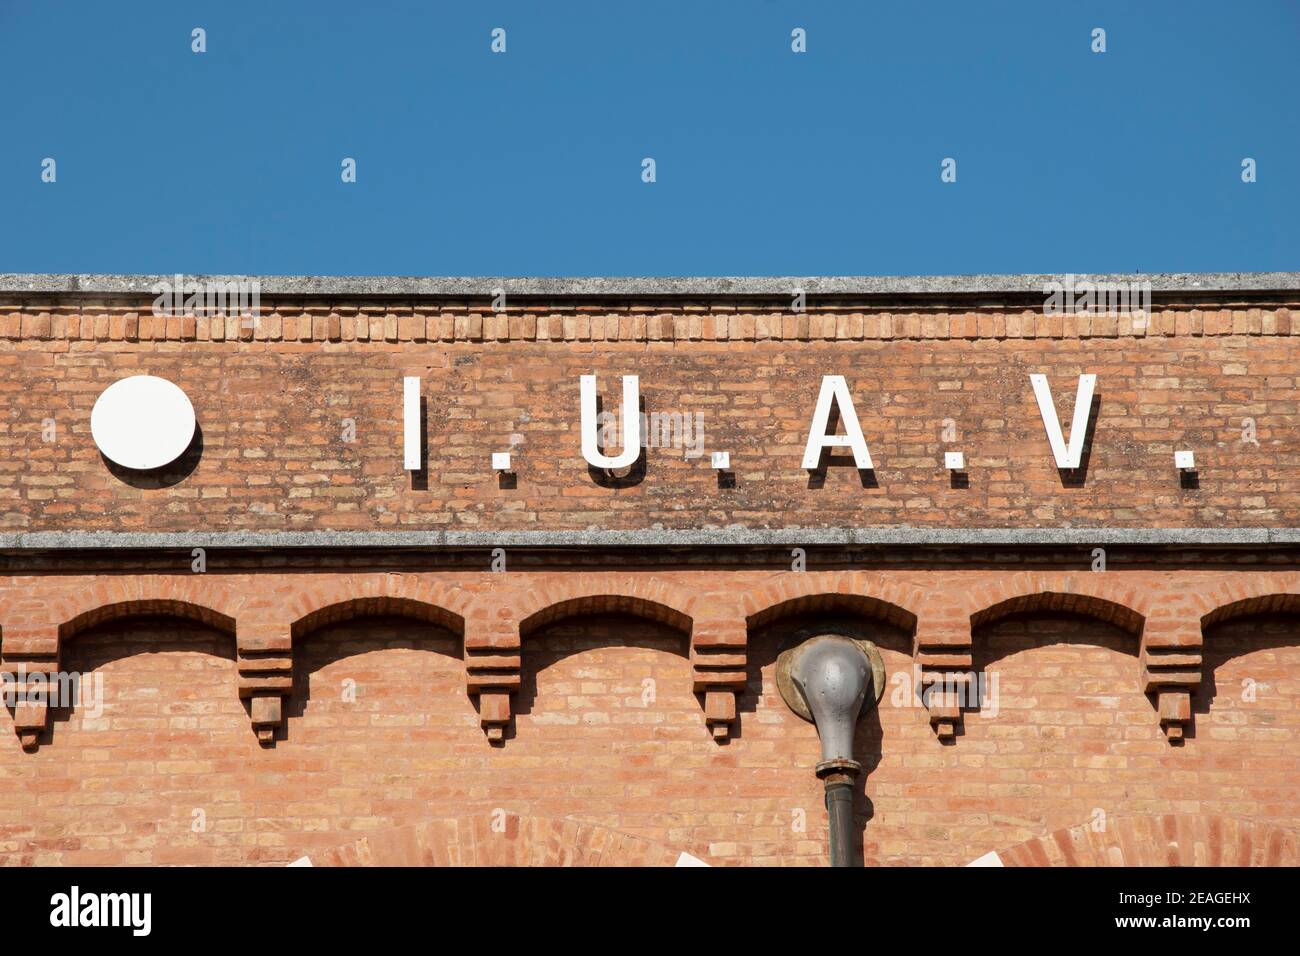 University Institute of Architecture I.U.A.V. , city of Venice, Italy, Europe Stock Photo